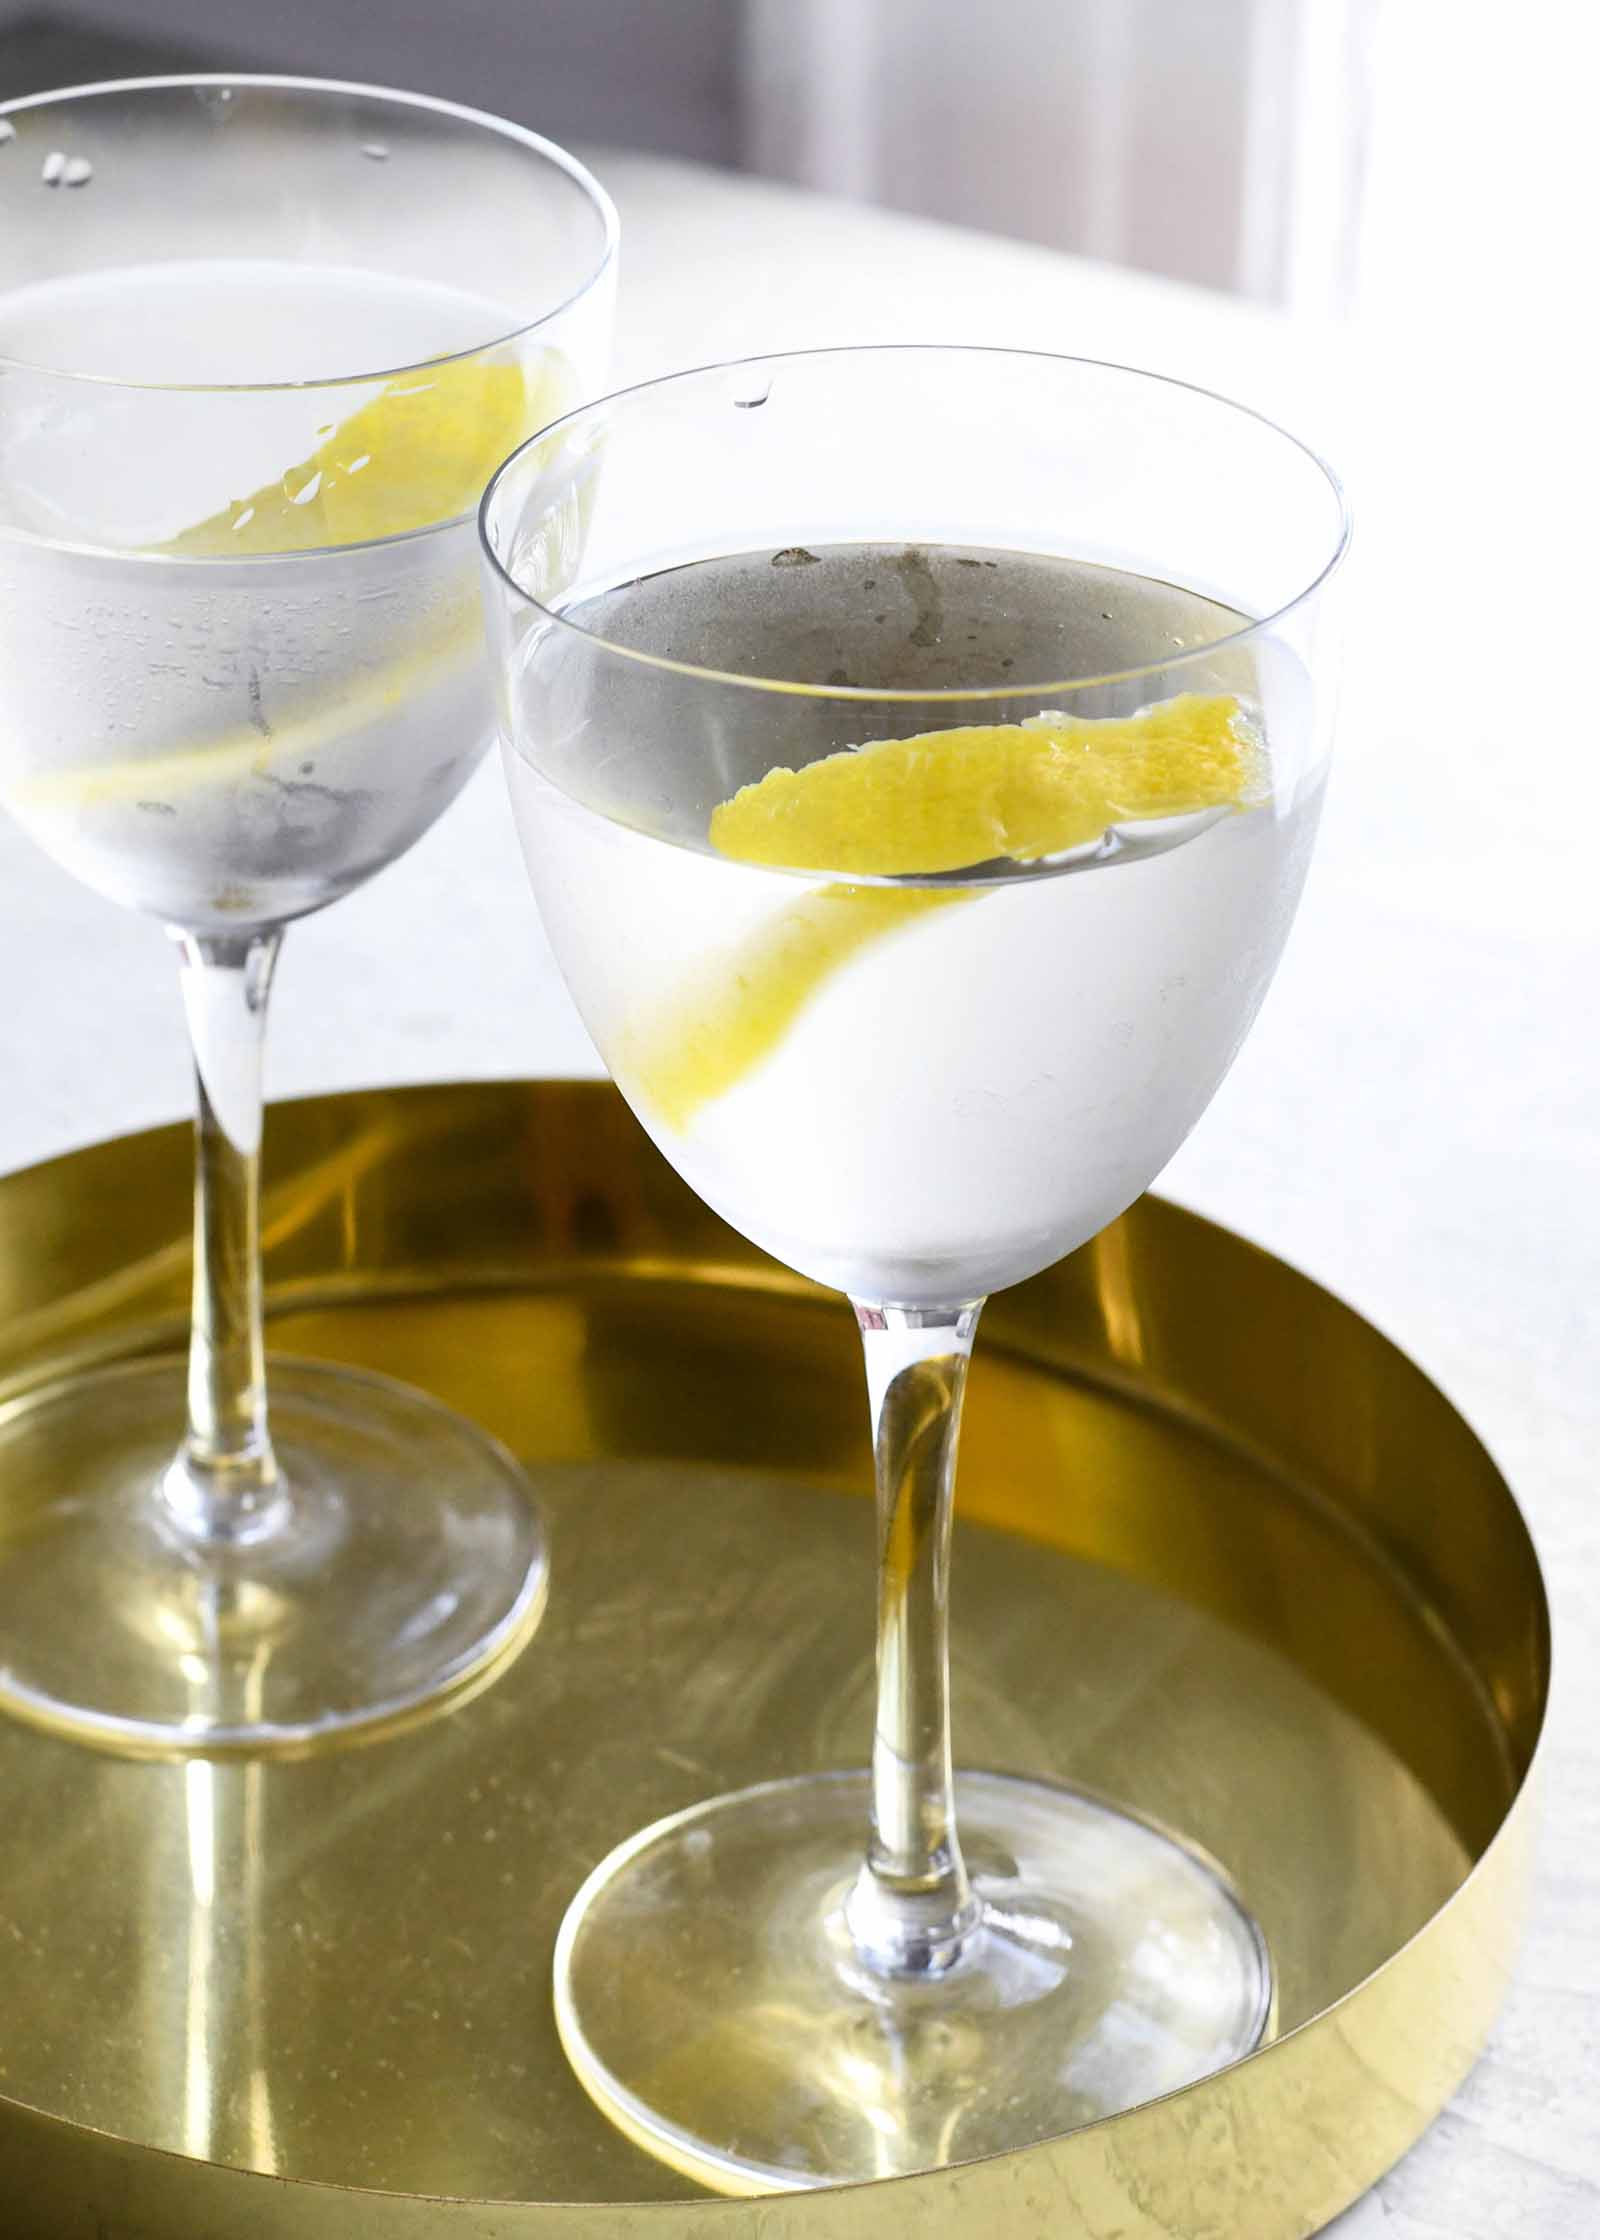 Dry Martini Recipe vodka martini in glass with lemon peel garnish